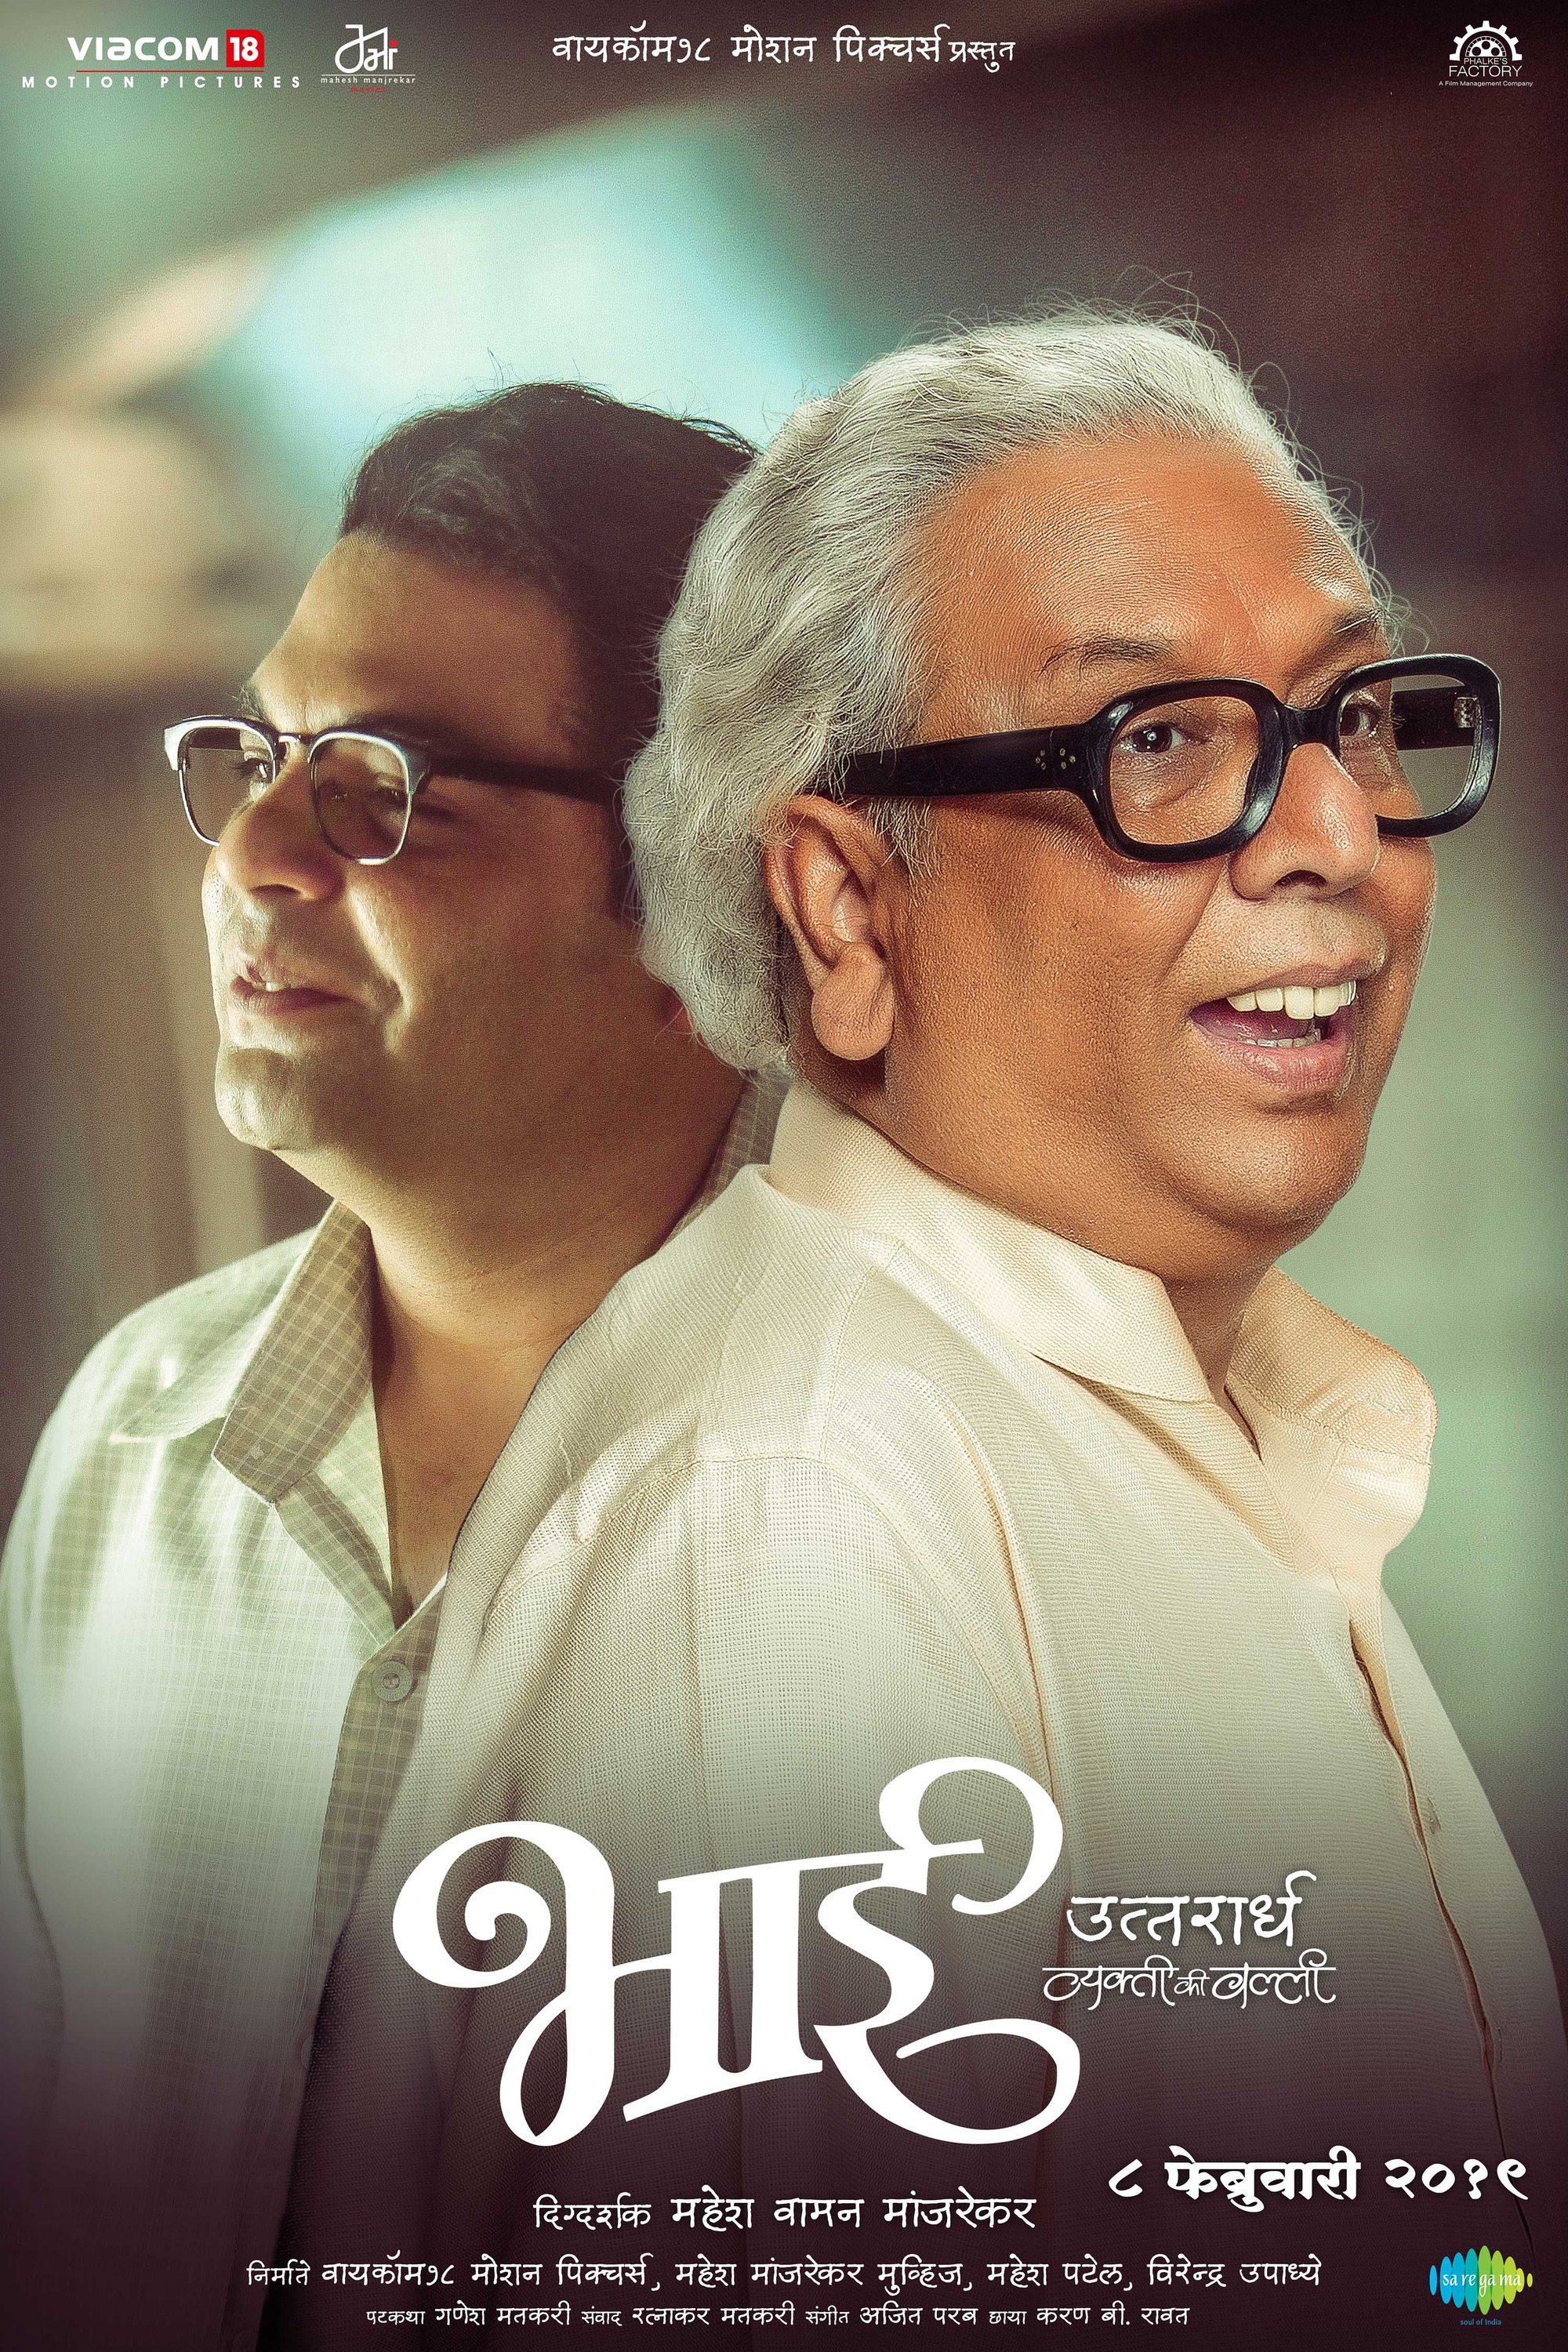 Mega Sized Movie Poster Image for Bhai - Vyakti Ki Valli (#5 of 6)